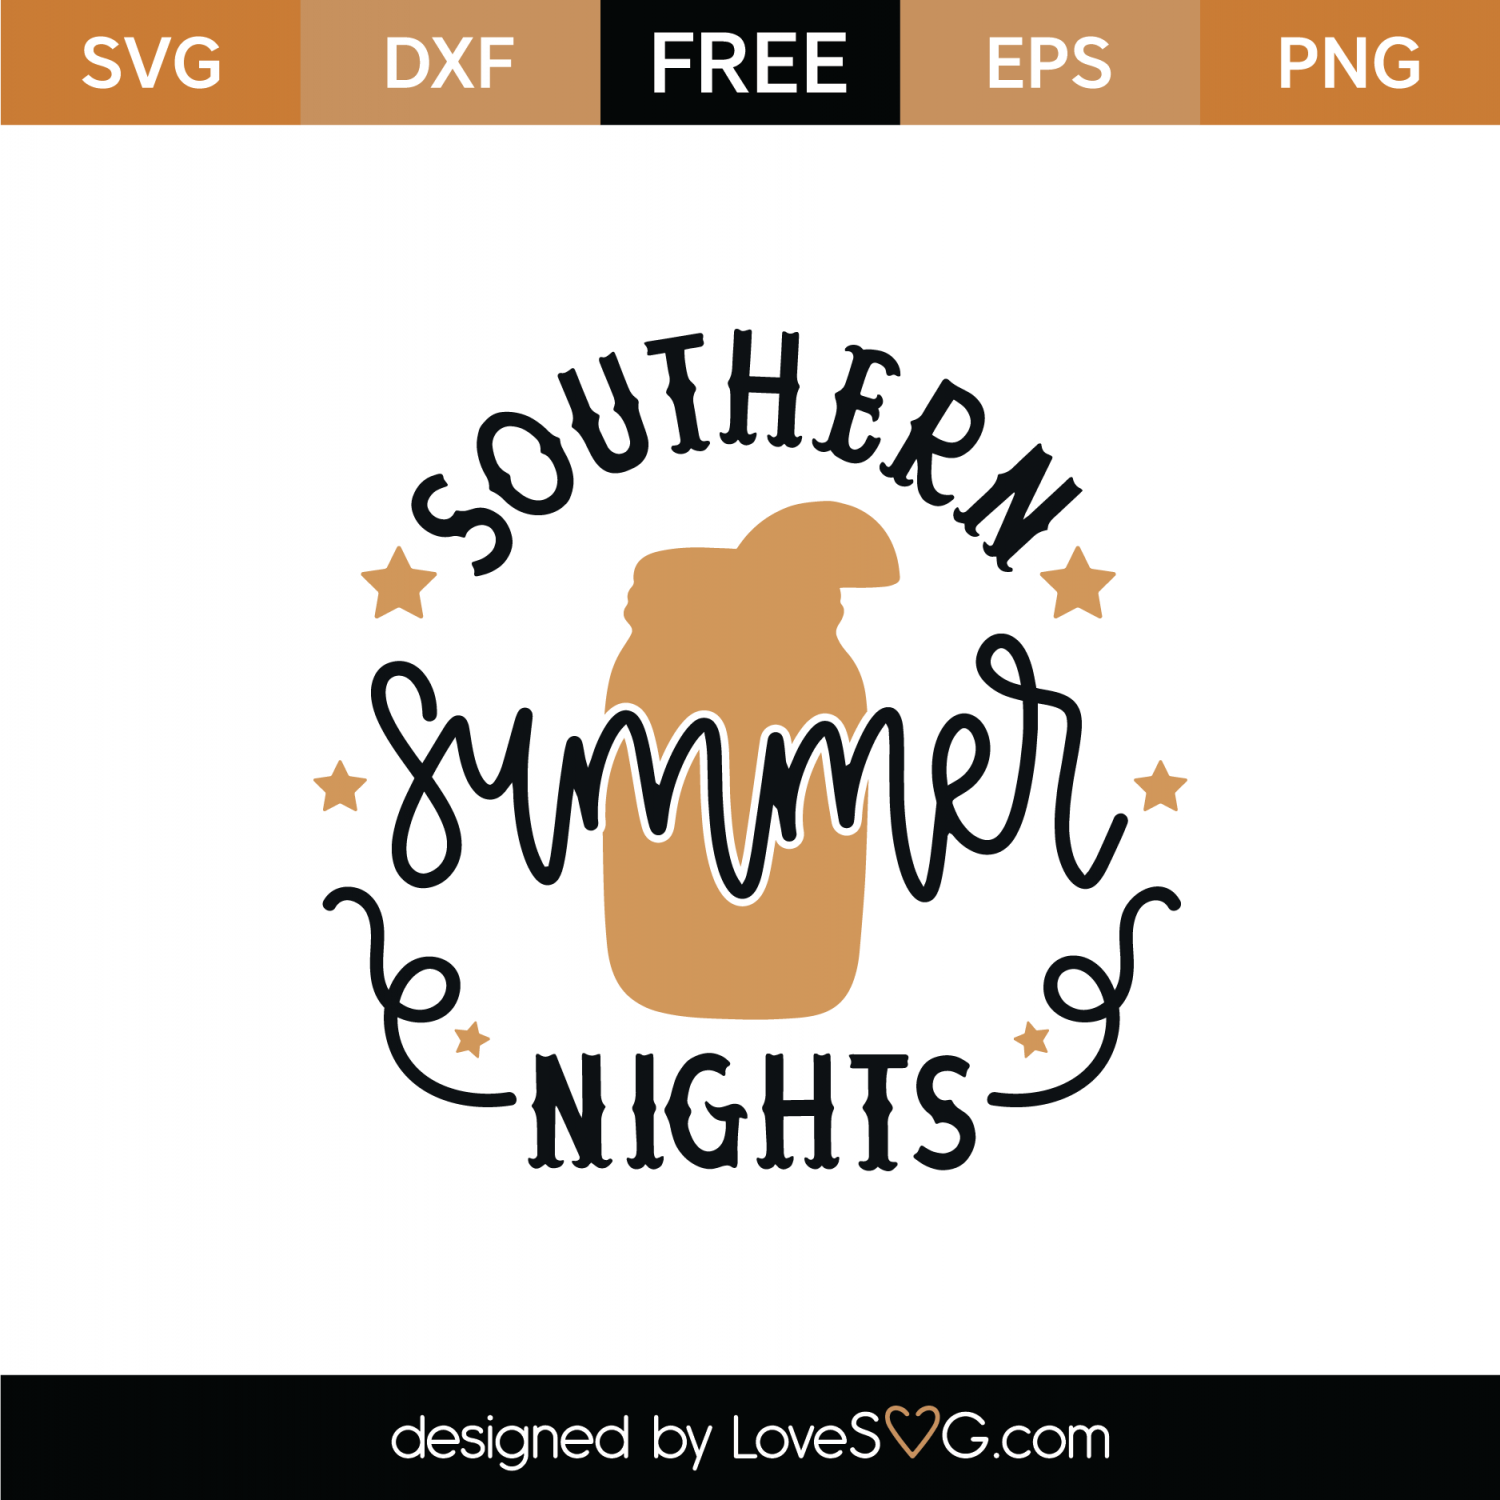 Download Free Southern Summer Nights SVG Cut File | Lovesvg.com